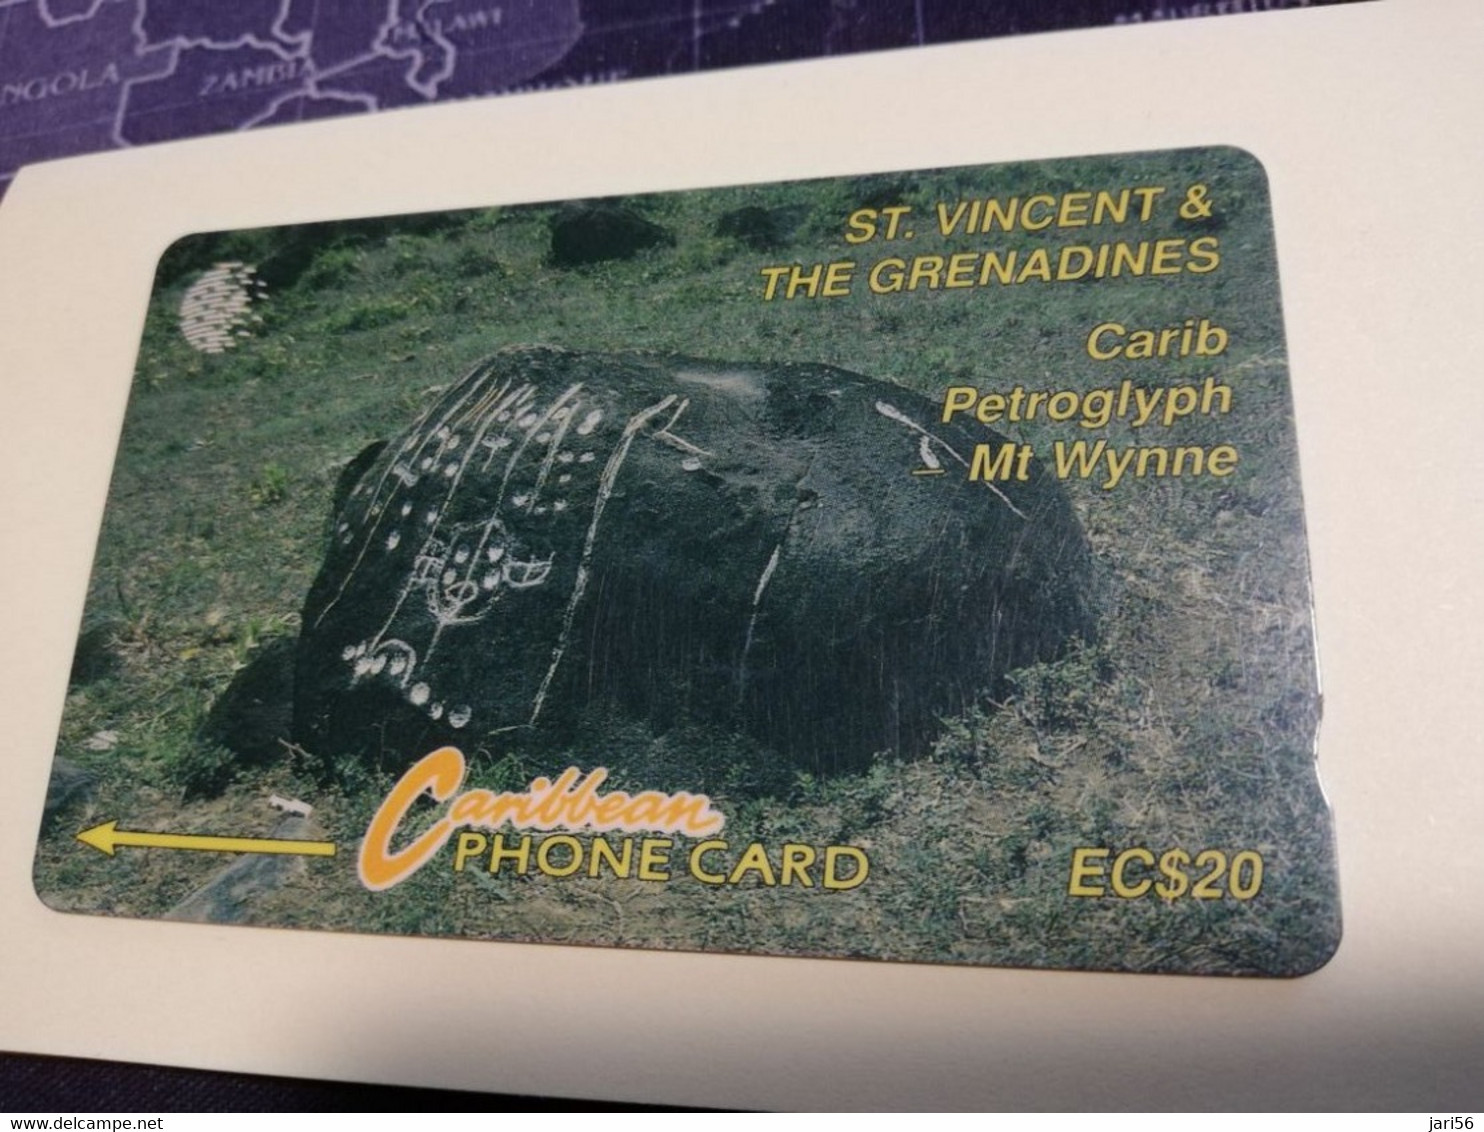 ST VINCENT & GRENADINES  GPT CARD   $ 20,- 10CSVB   CARIB PETROGLYPH       C&W    Fine Used  Card  **3366** - St. Vincent & The Grenadines